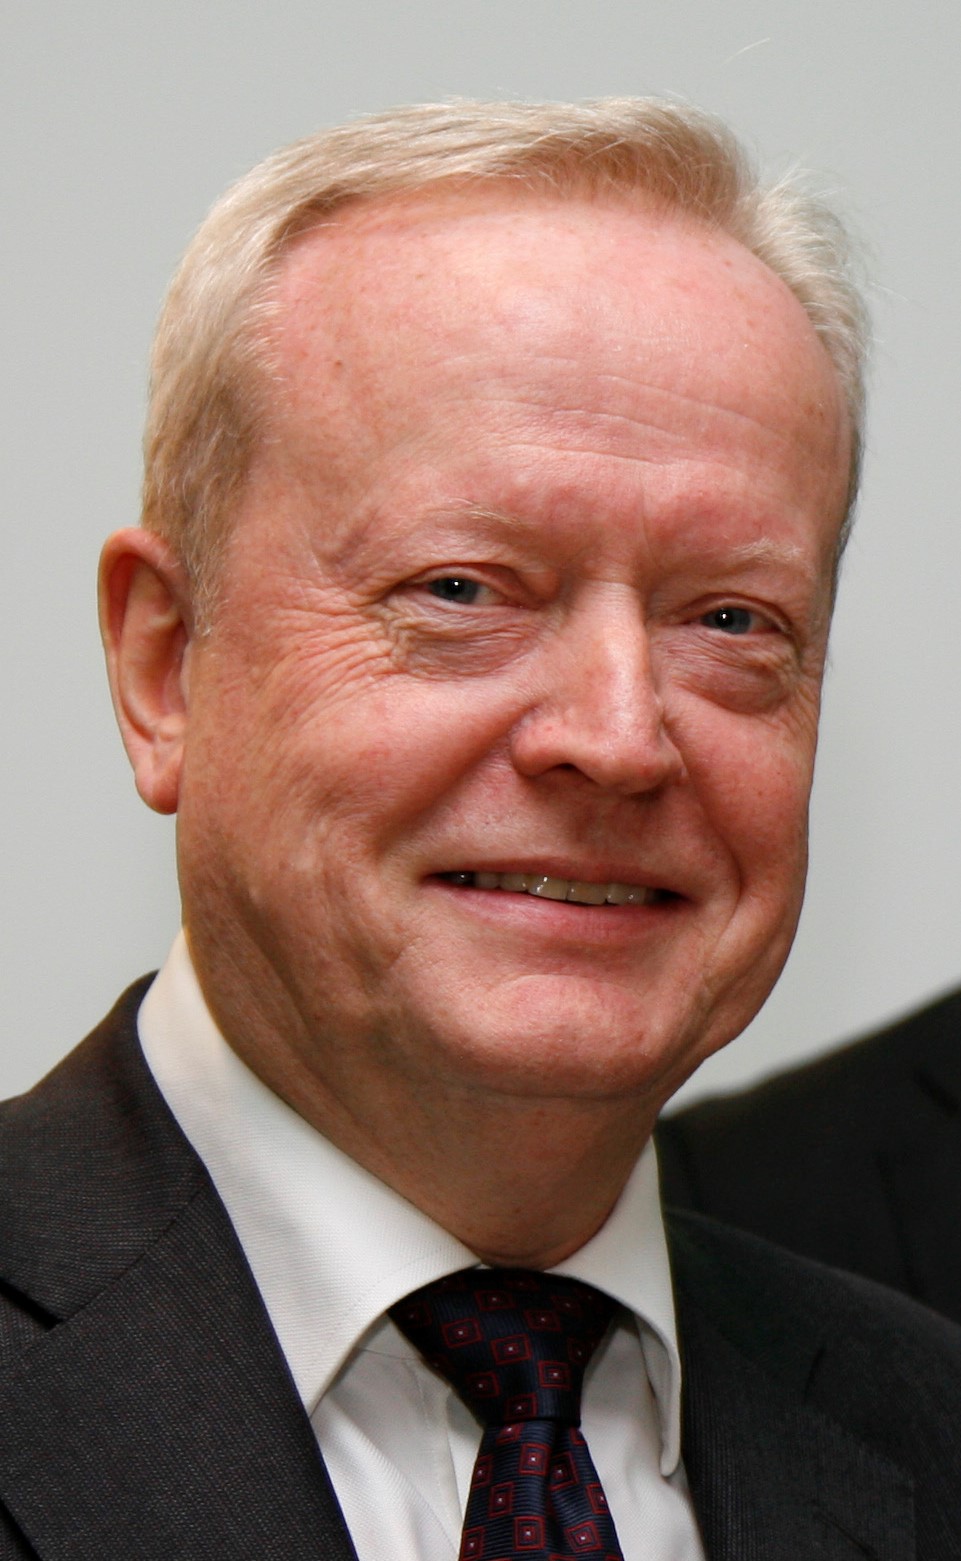  Henrik Lumholdt